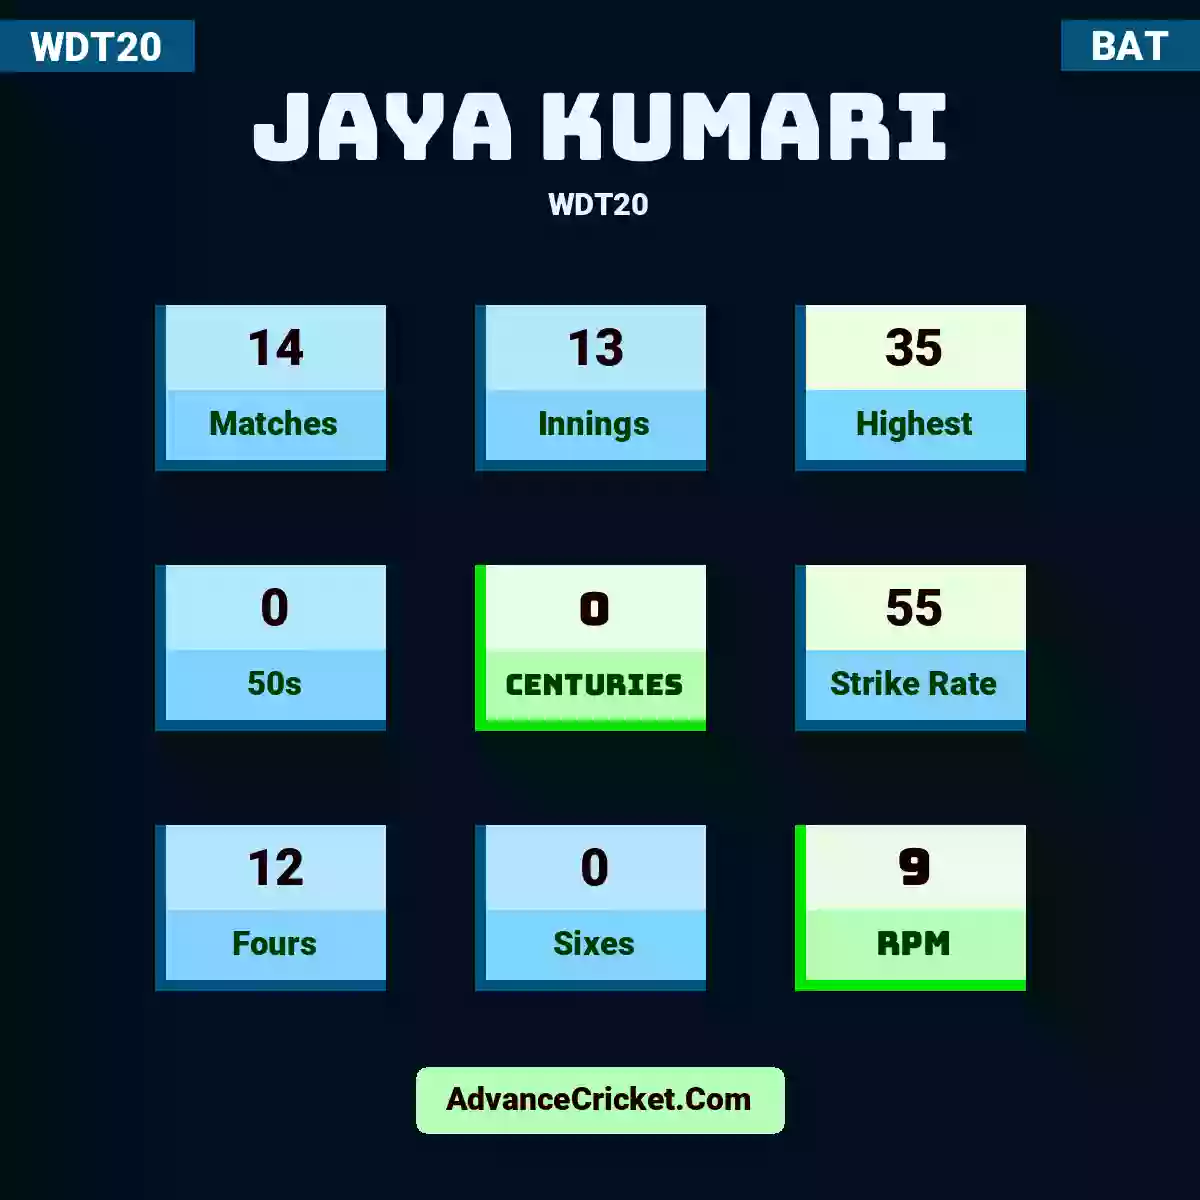 Jaya Kumari WDT20 , Jaya Kumari played 14 matches, scored 35 runs as highest, 0 half-centuries, and 0 centuries, with a strike rate of 55. J.Kumari hit 12 fours and 0 sixes, with an RPM of 9.